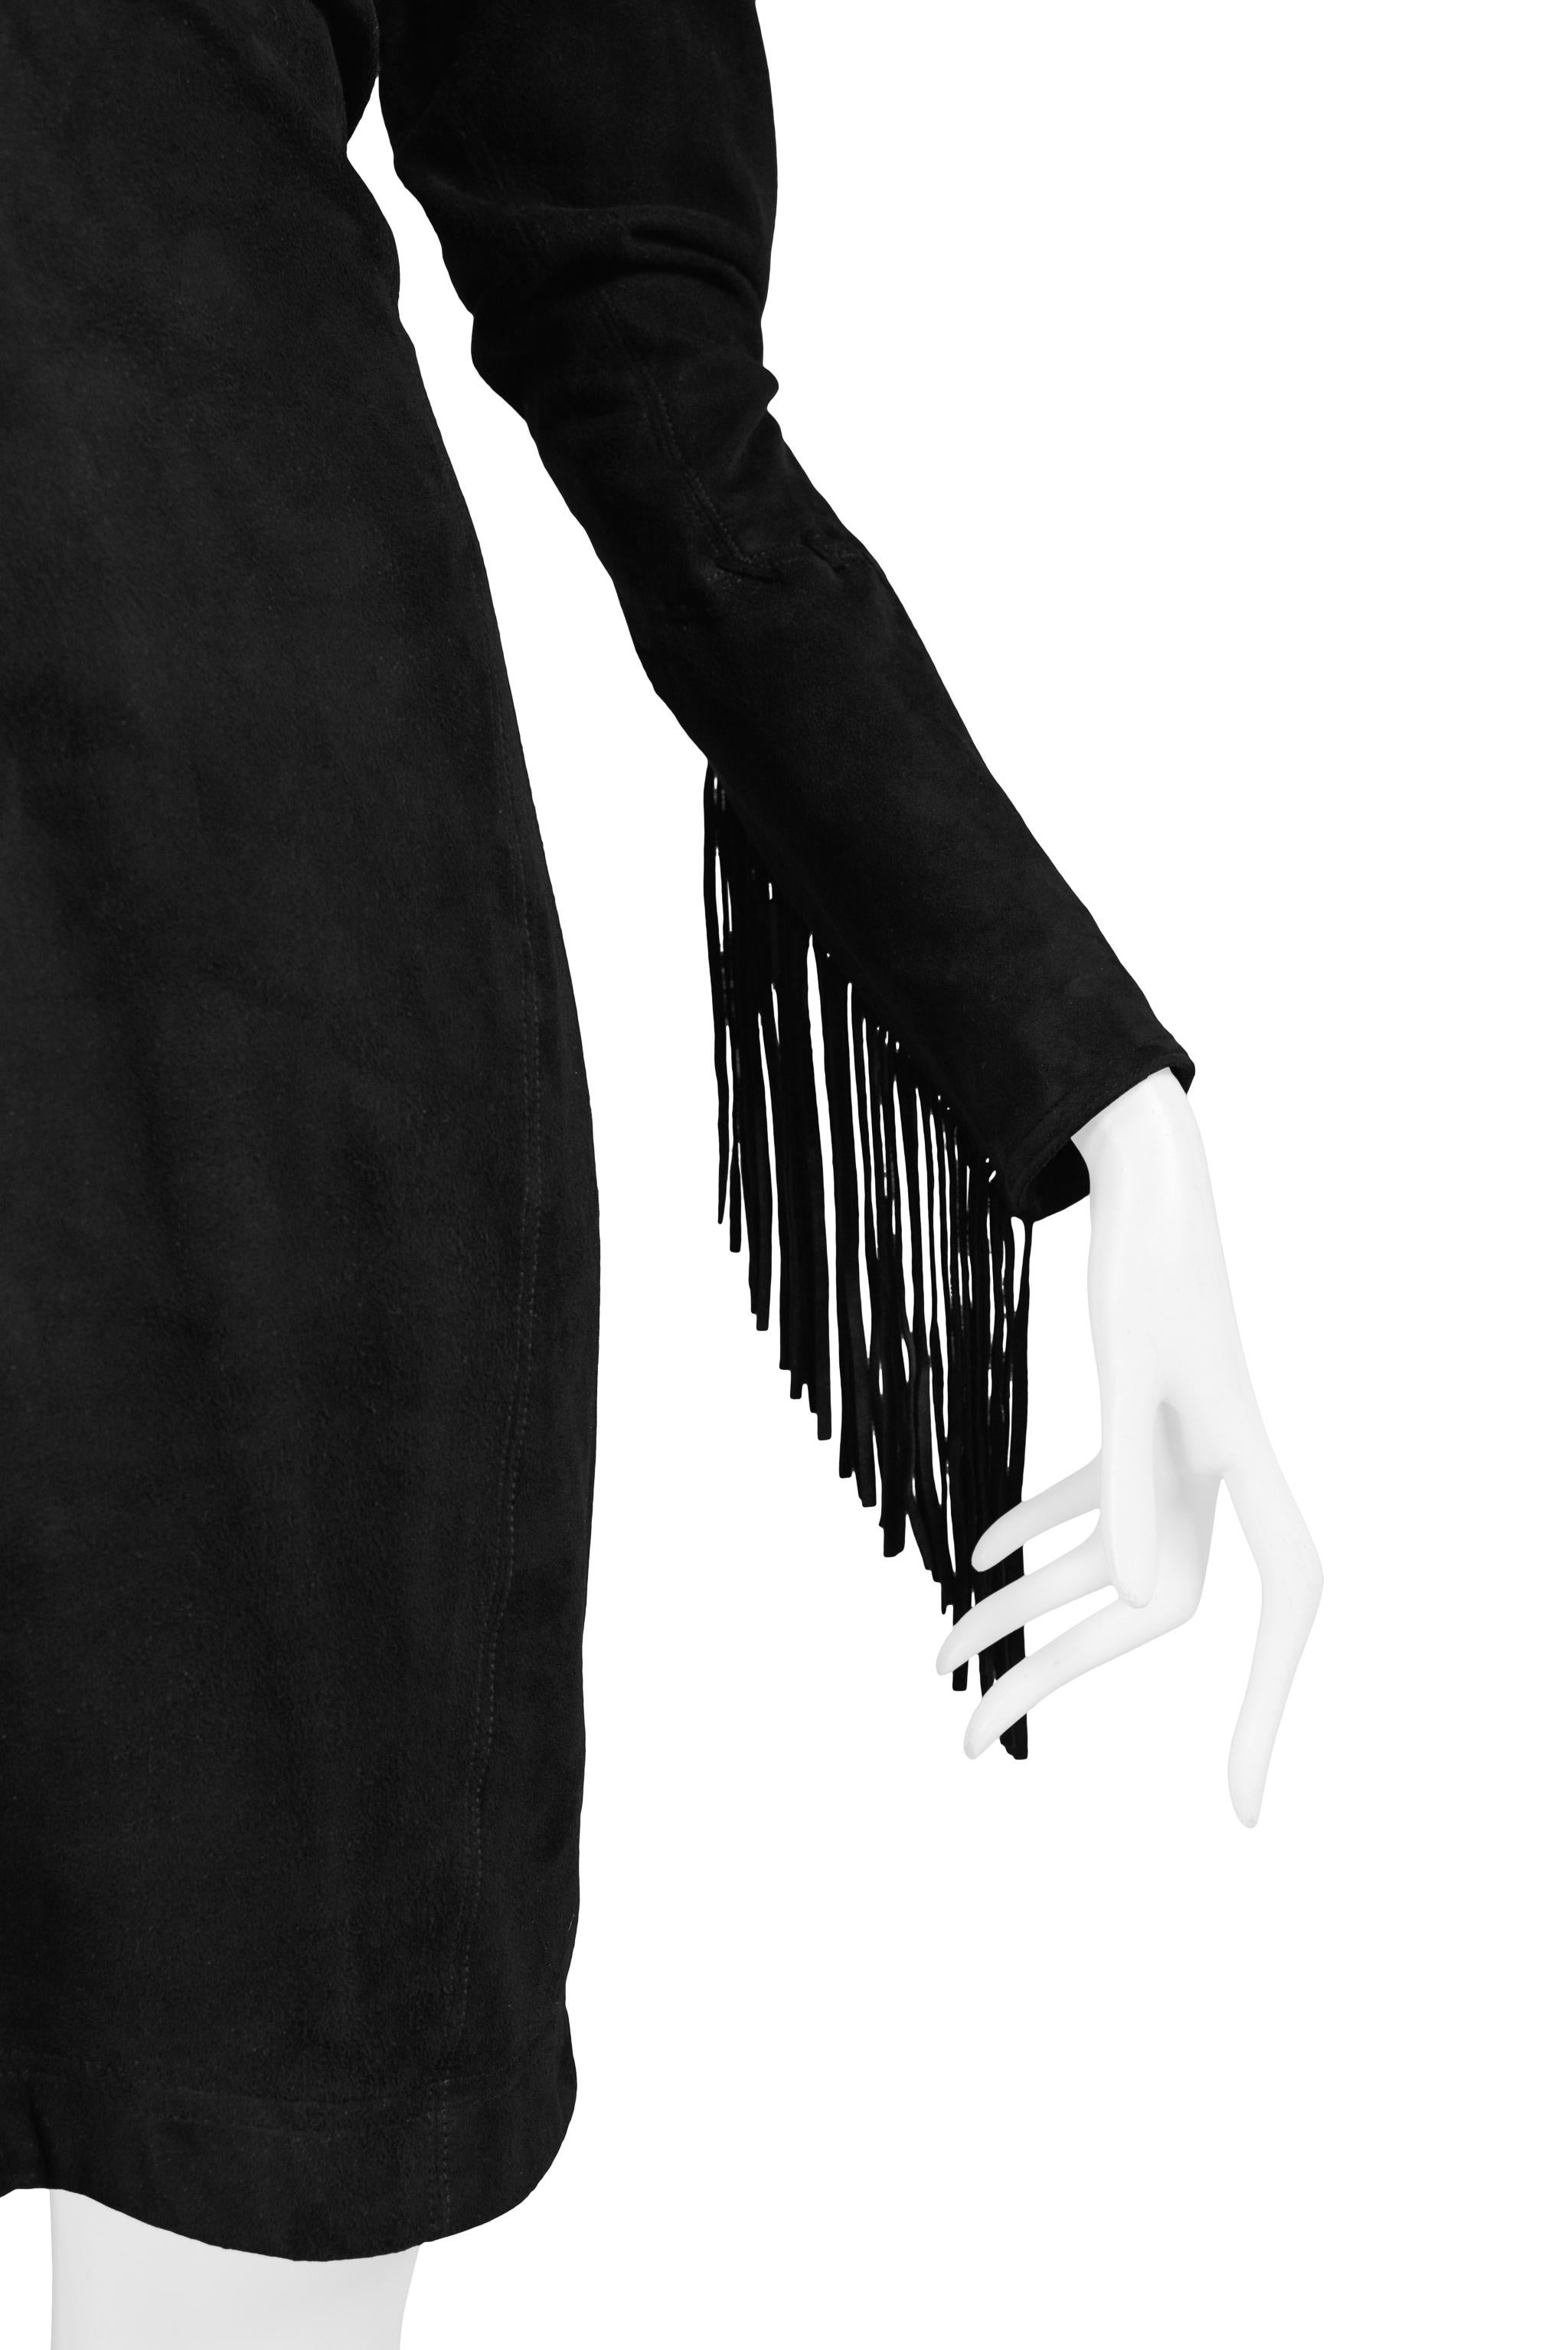 Issac Mizrahi Black Leather Suede Dress 1989 For Sale 1